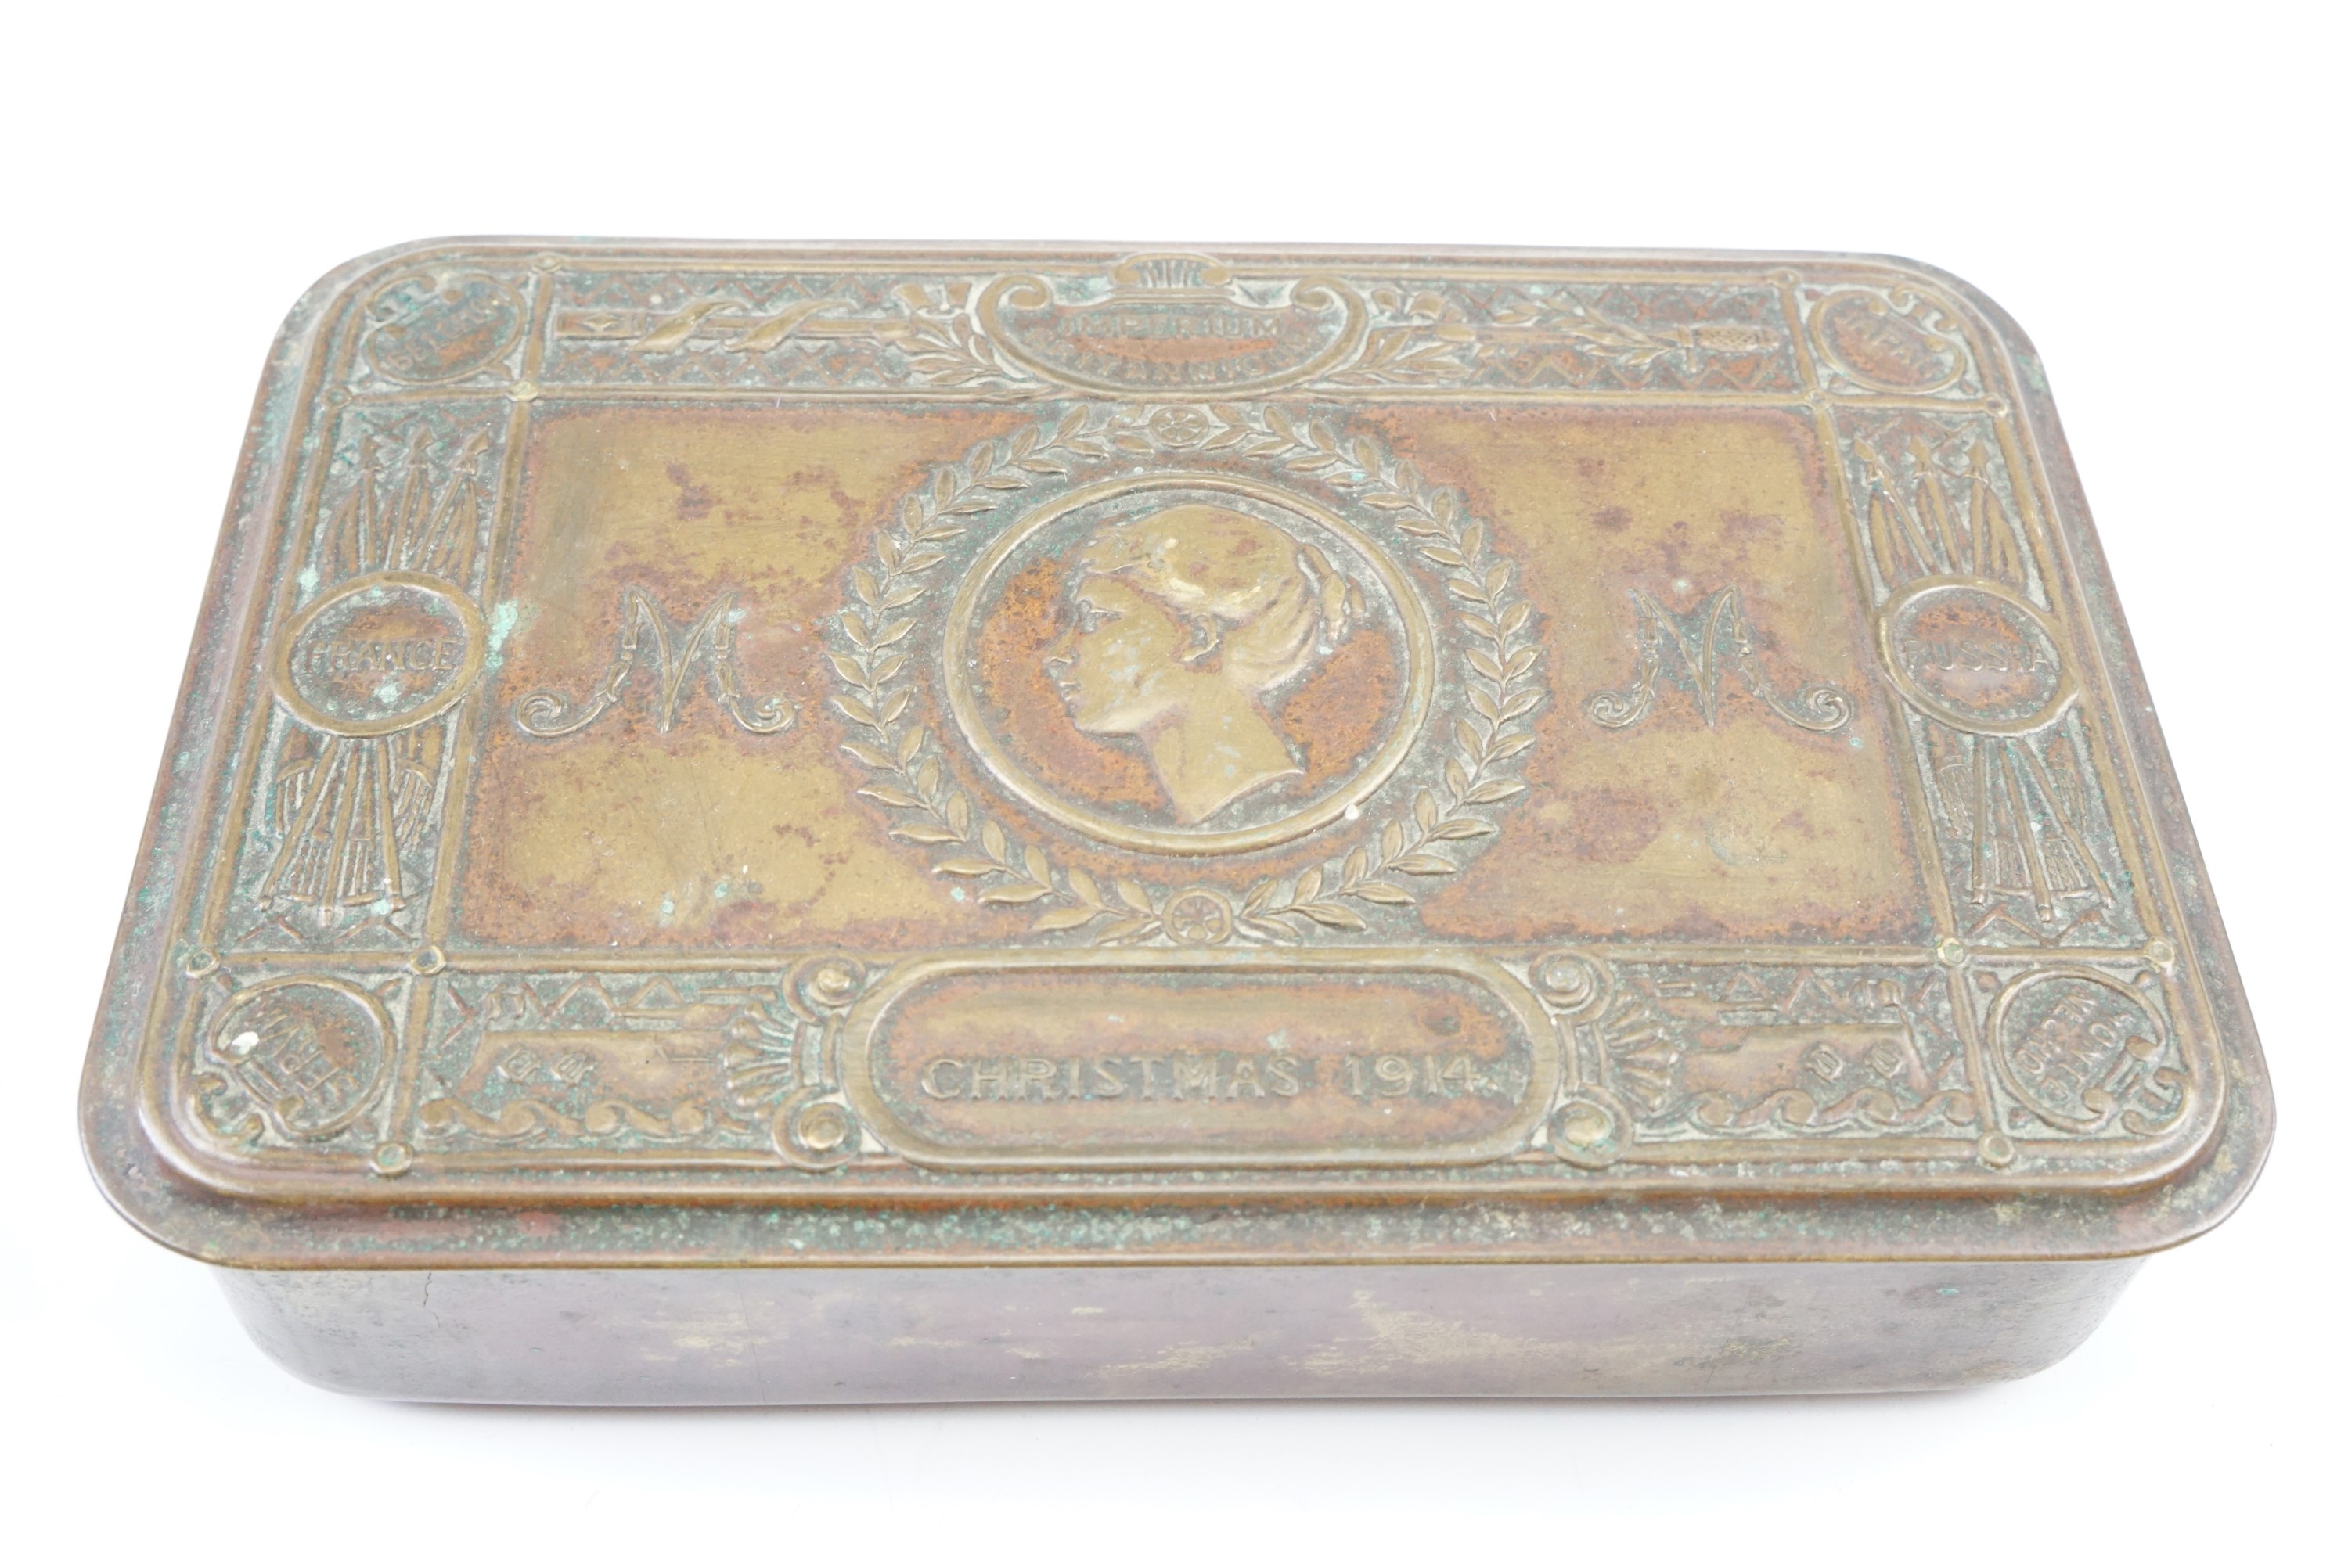 A 1914 Princess Mary gift tin